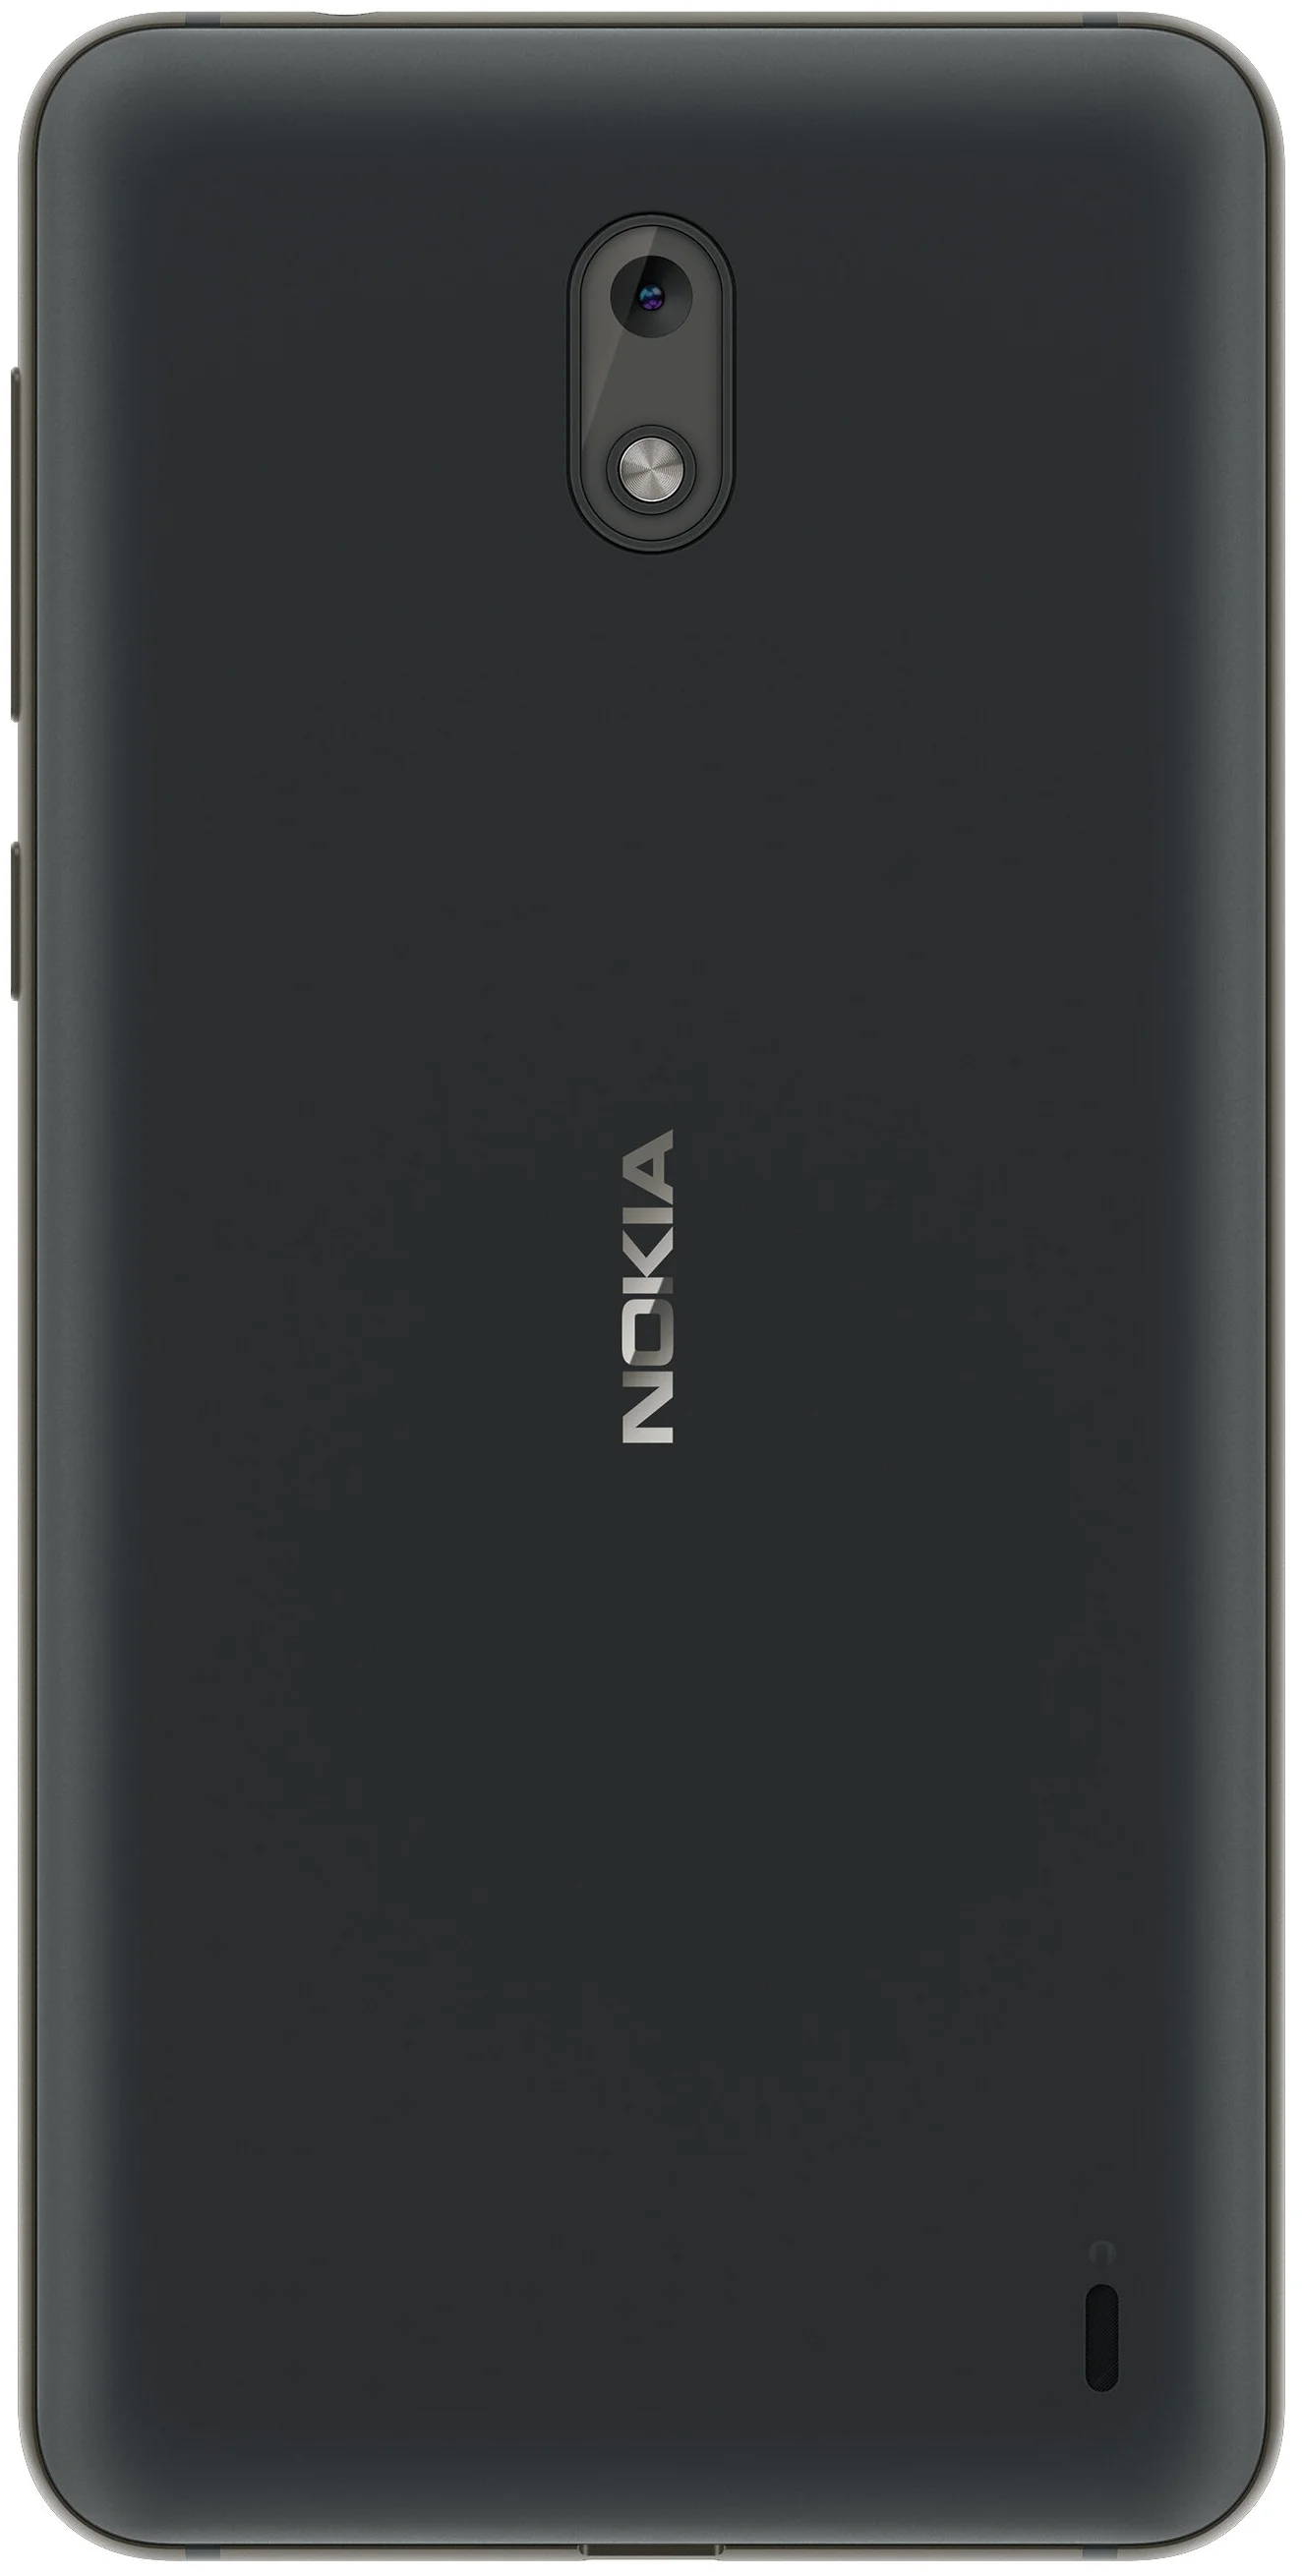 Nokia 2 - оперативная память: 1 ГБ